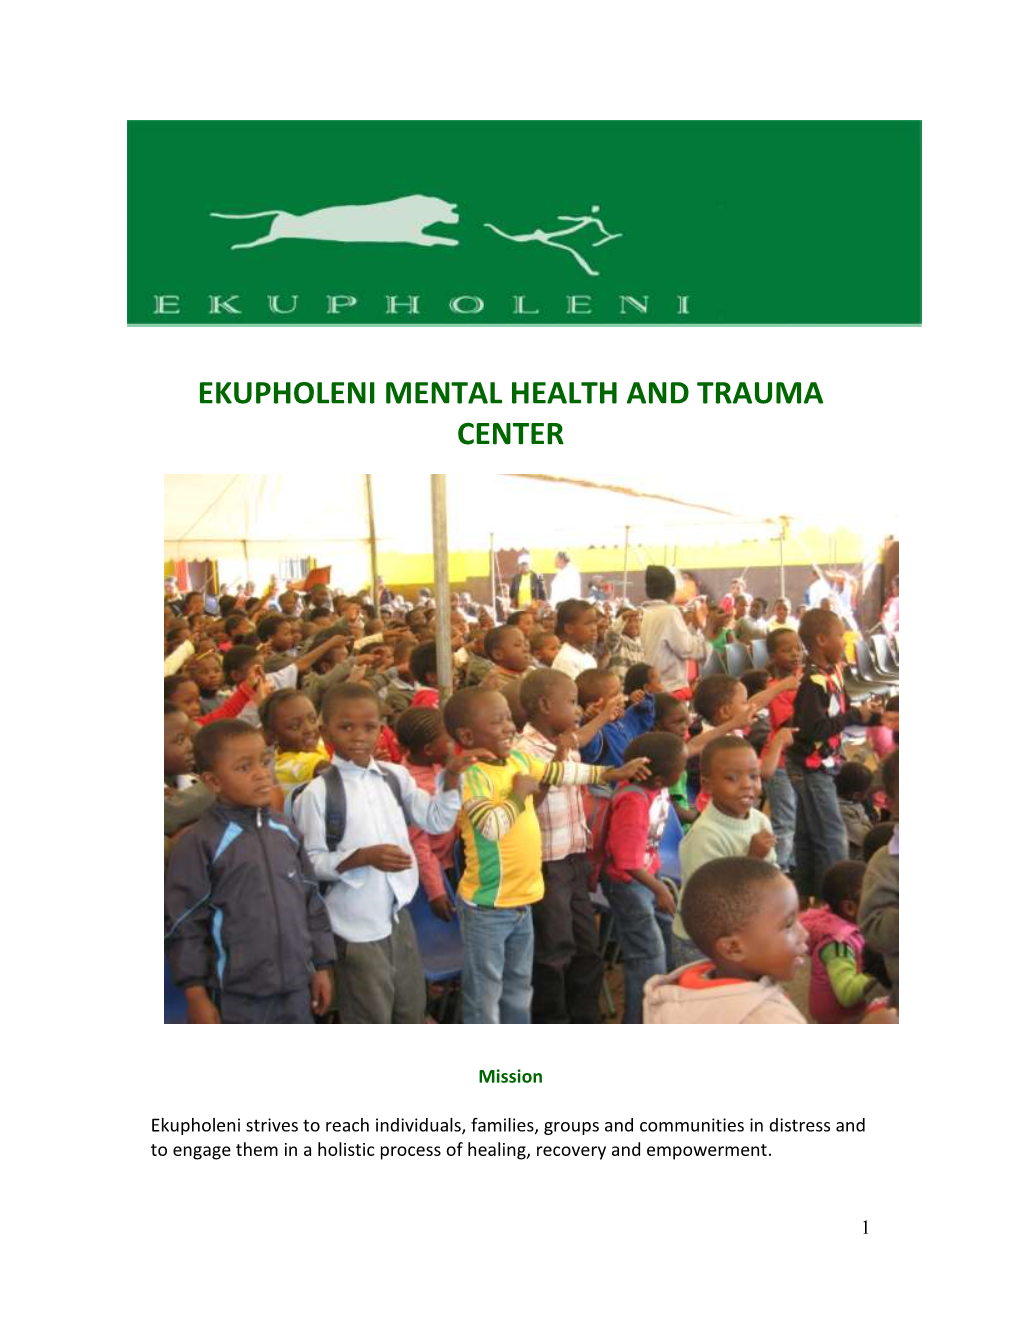 Ekupholeni Mental Health and Trauma Center